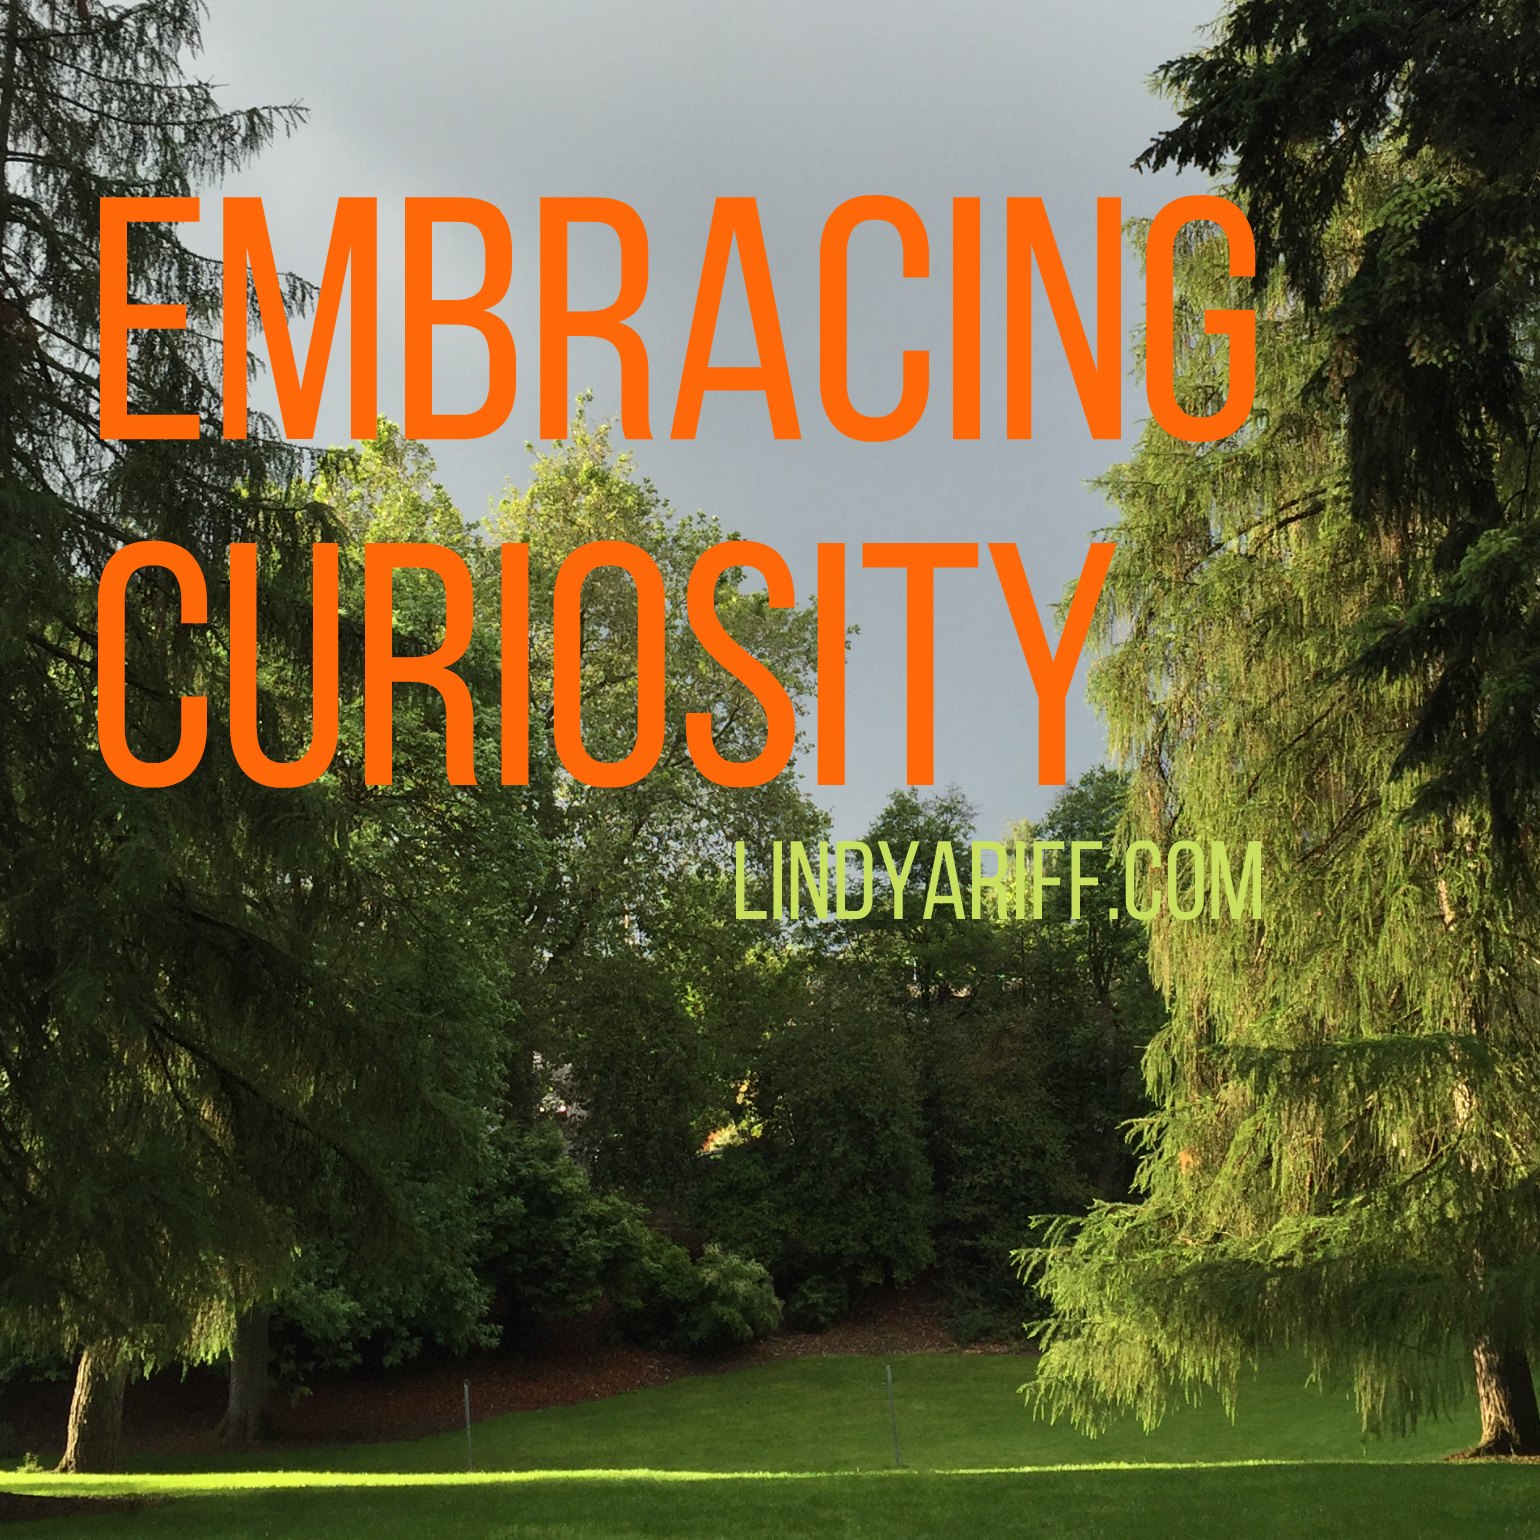 Embracing Curiosity